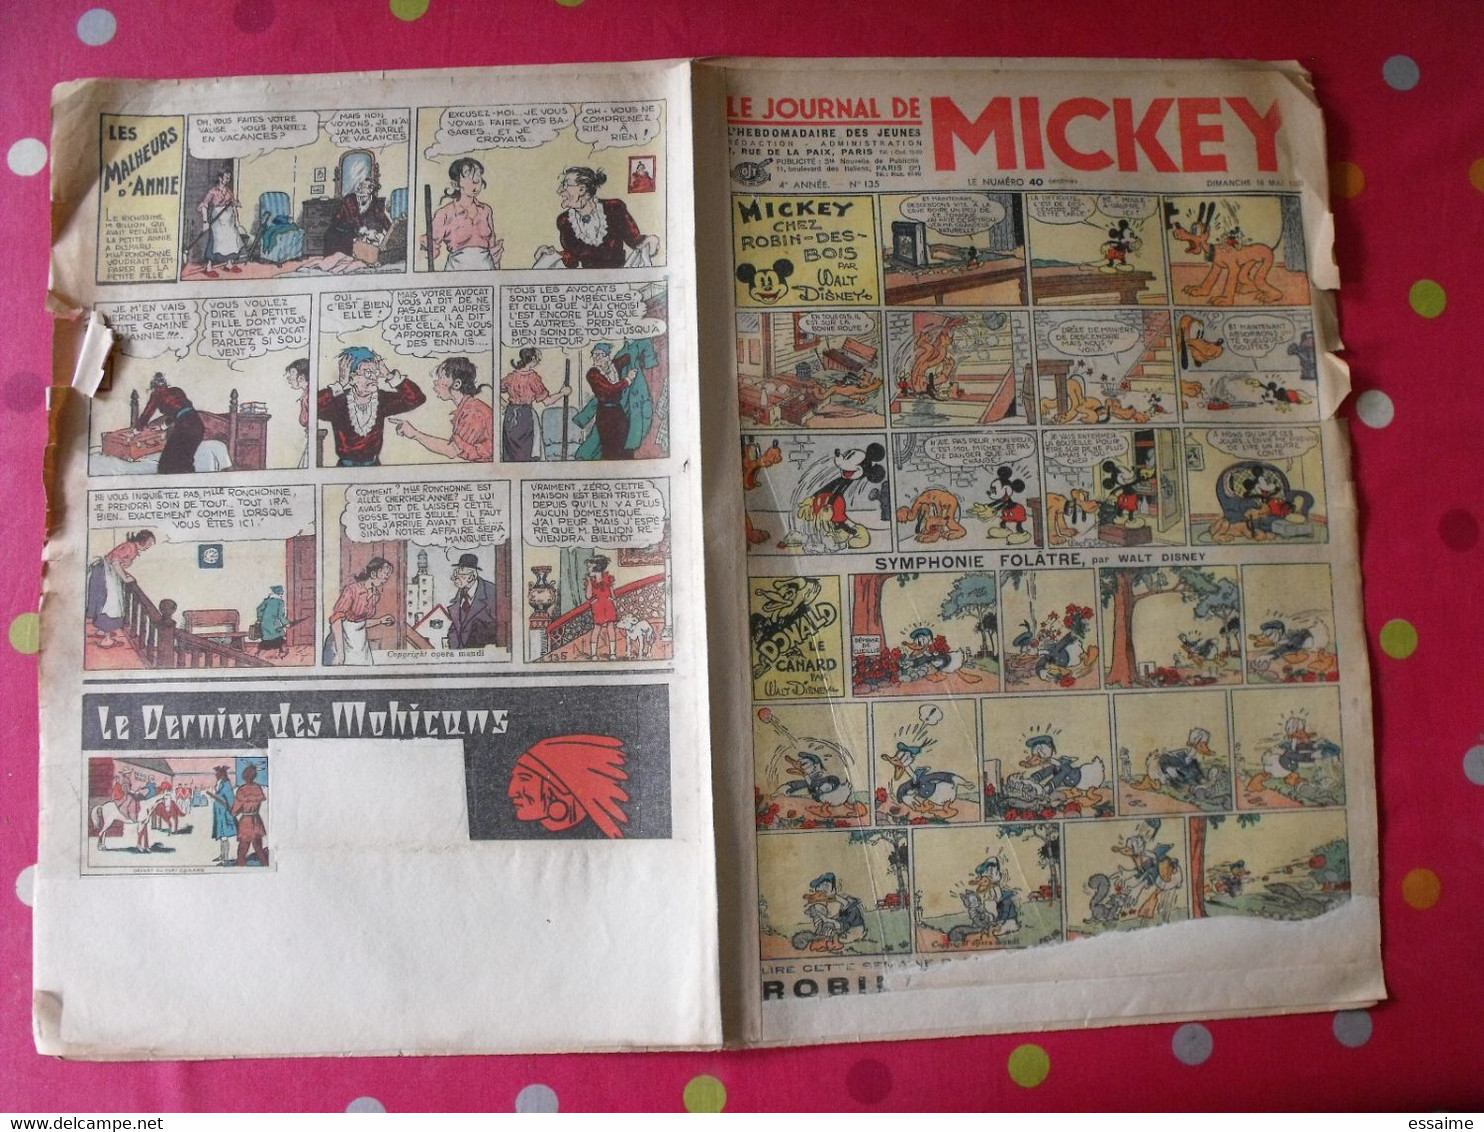 5 n° du journal de Mickey 1937. jojo richard jim la jungle malheurs d'annie donald cora tempête.